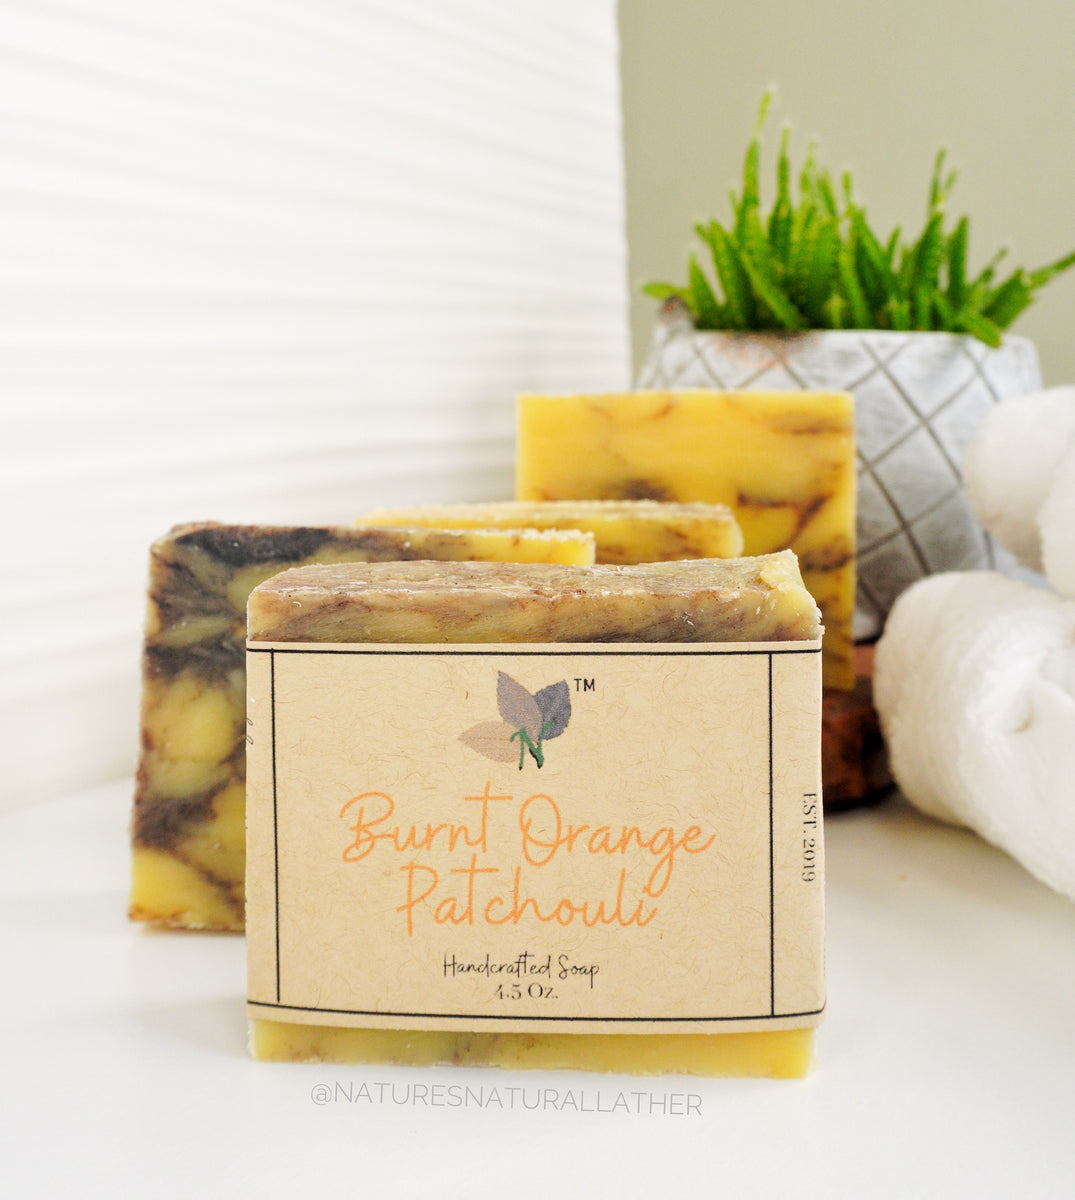 sweet orange, ylang ylang & patchouli soap bar – our lovely naturals